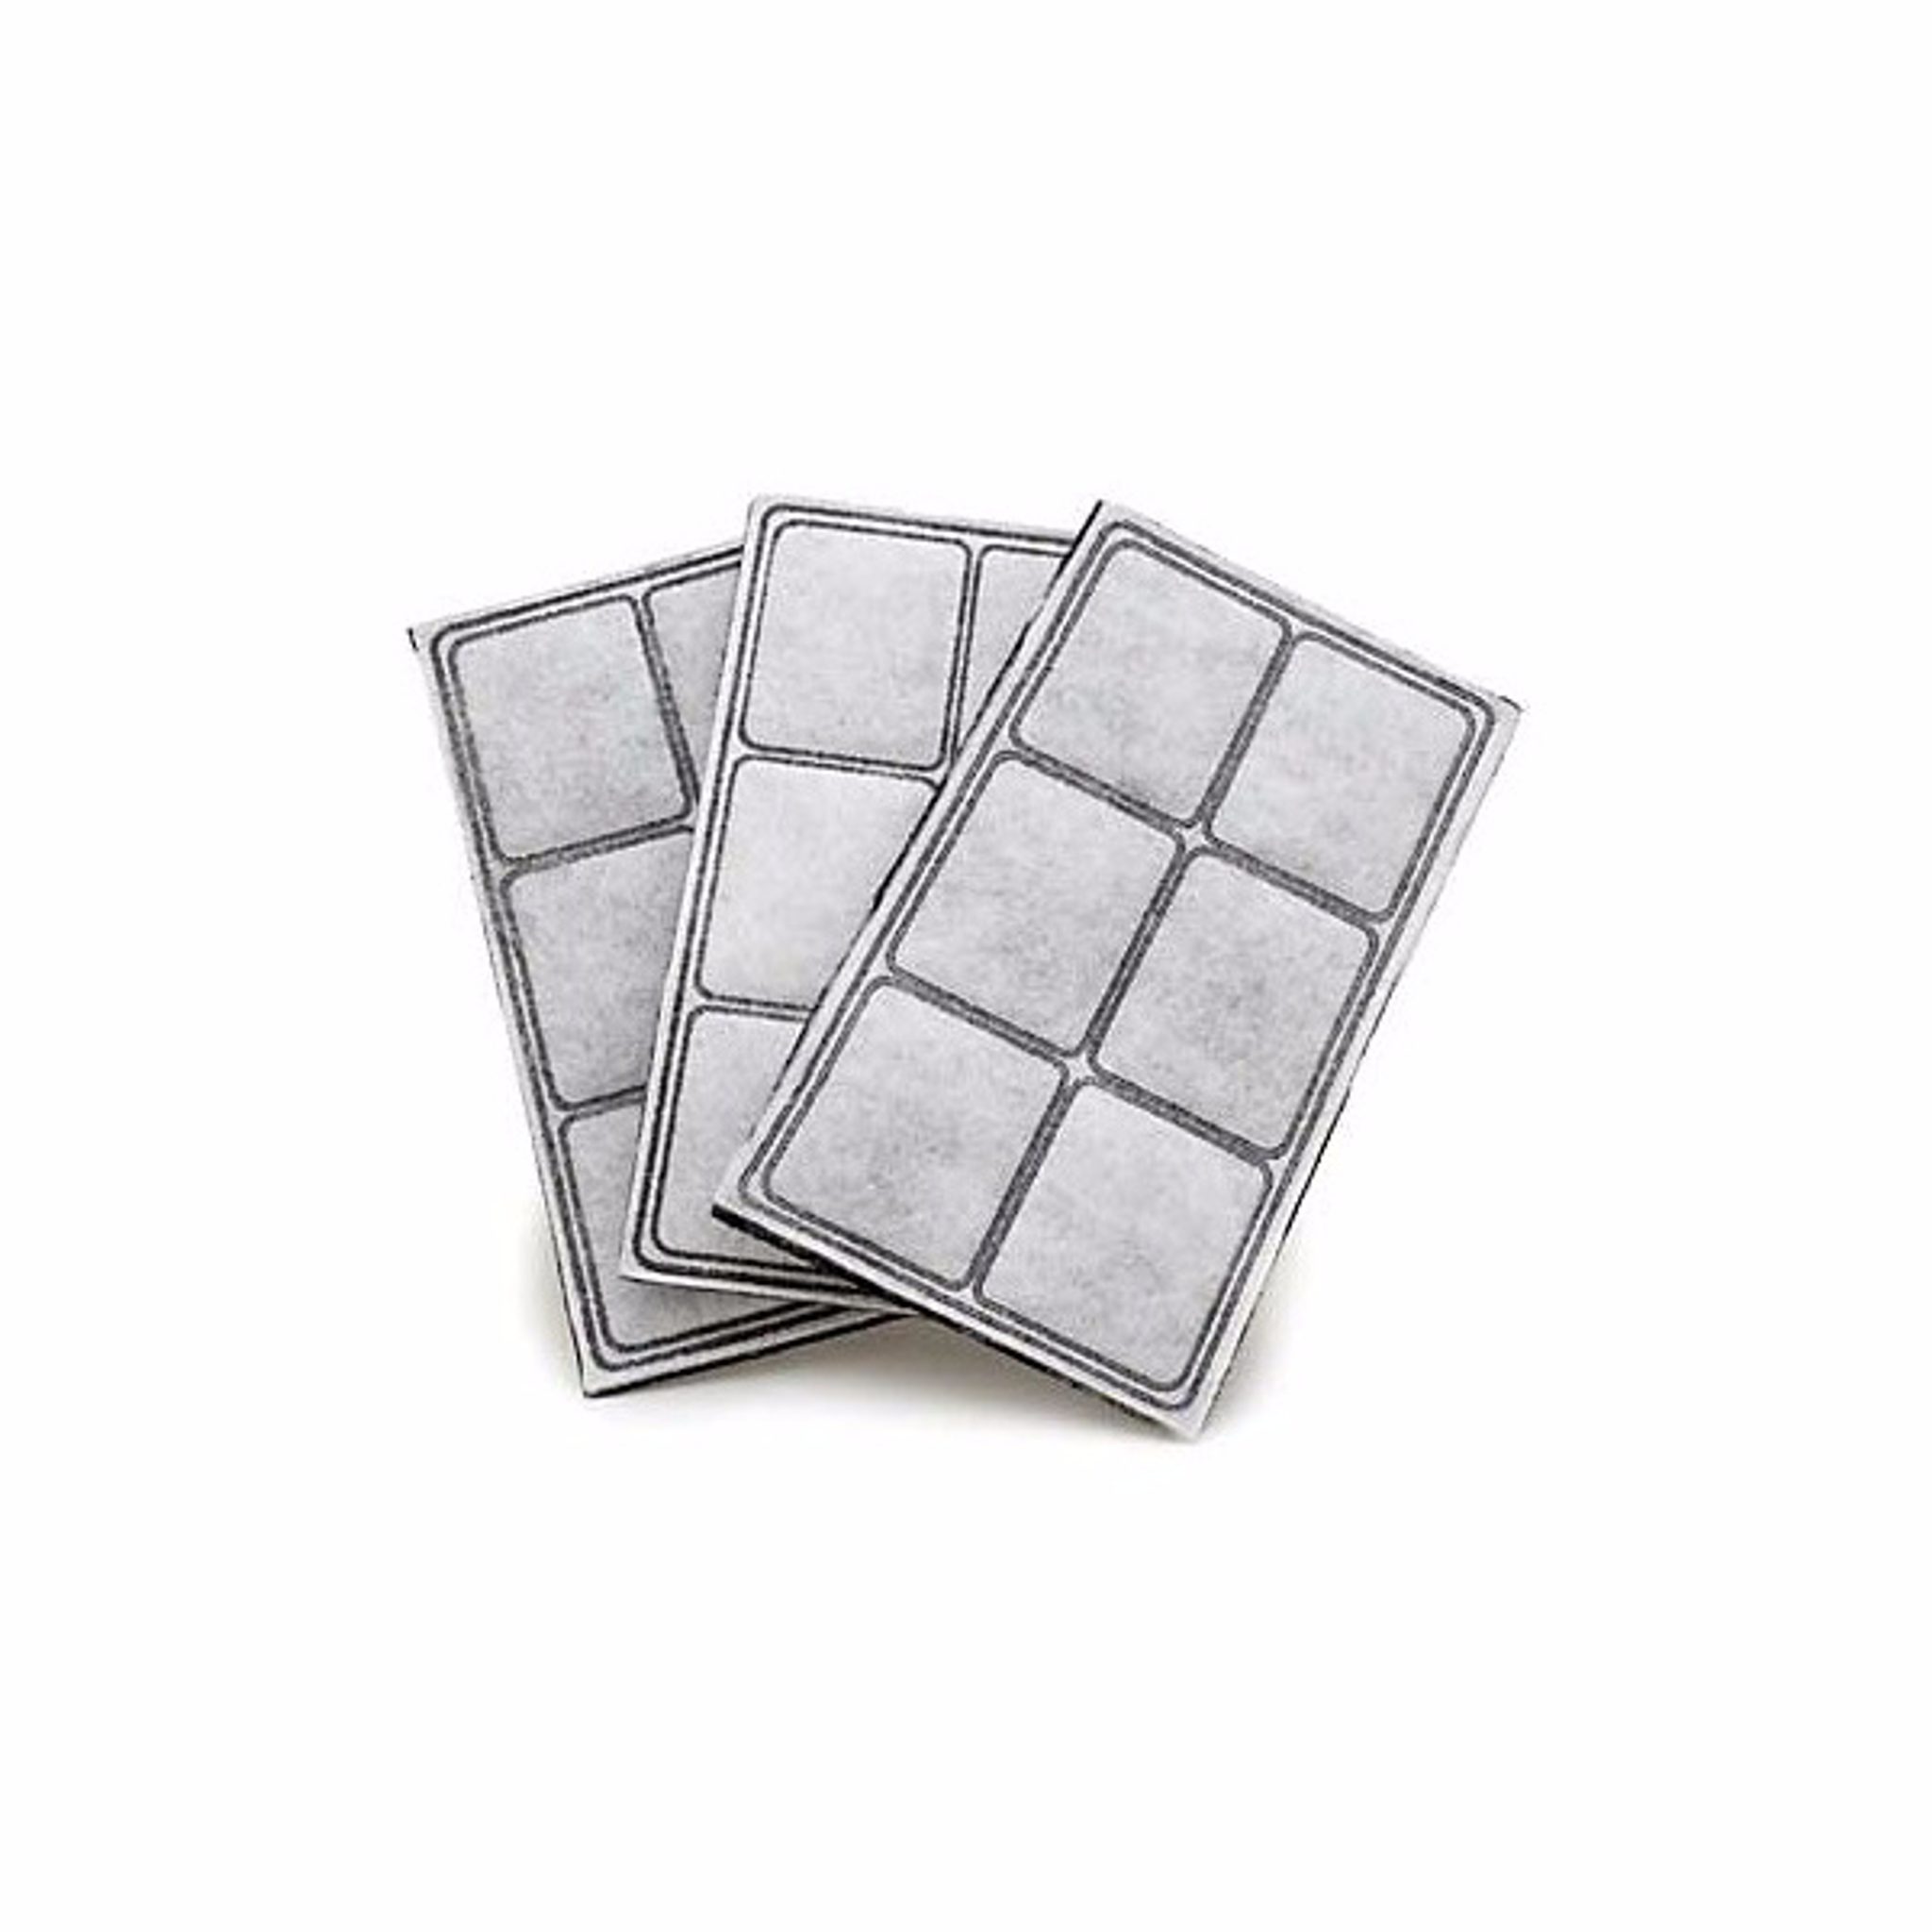 Náhradní filtry Drinkwell mini, Platinum a Original, 3 kusy